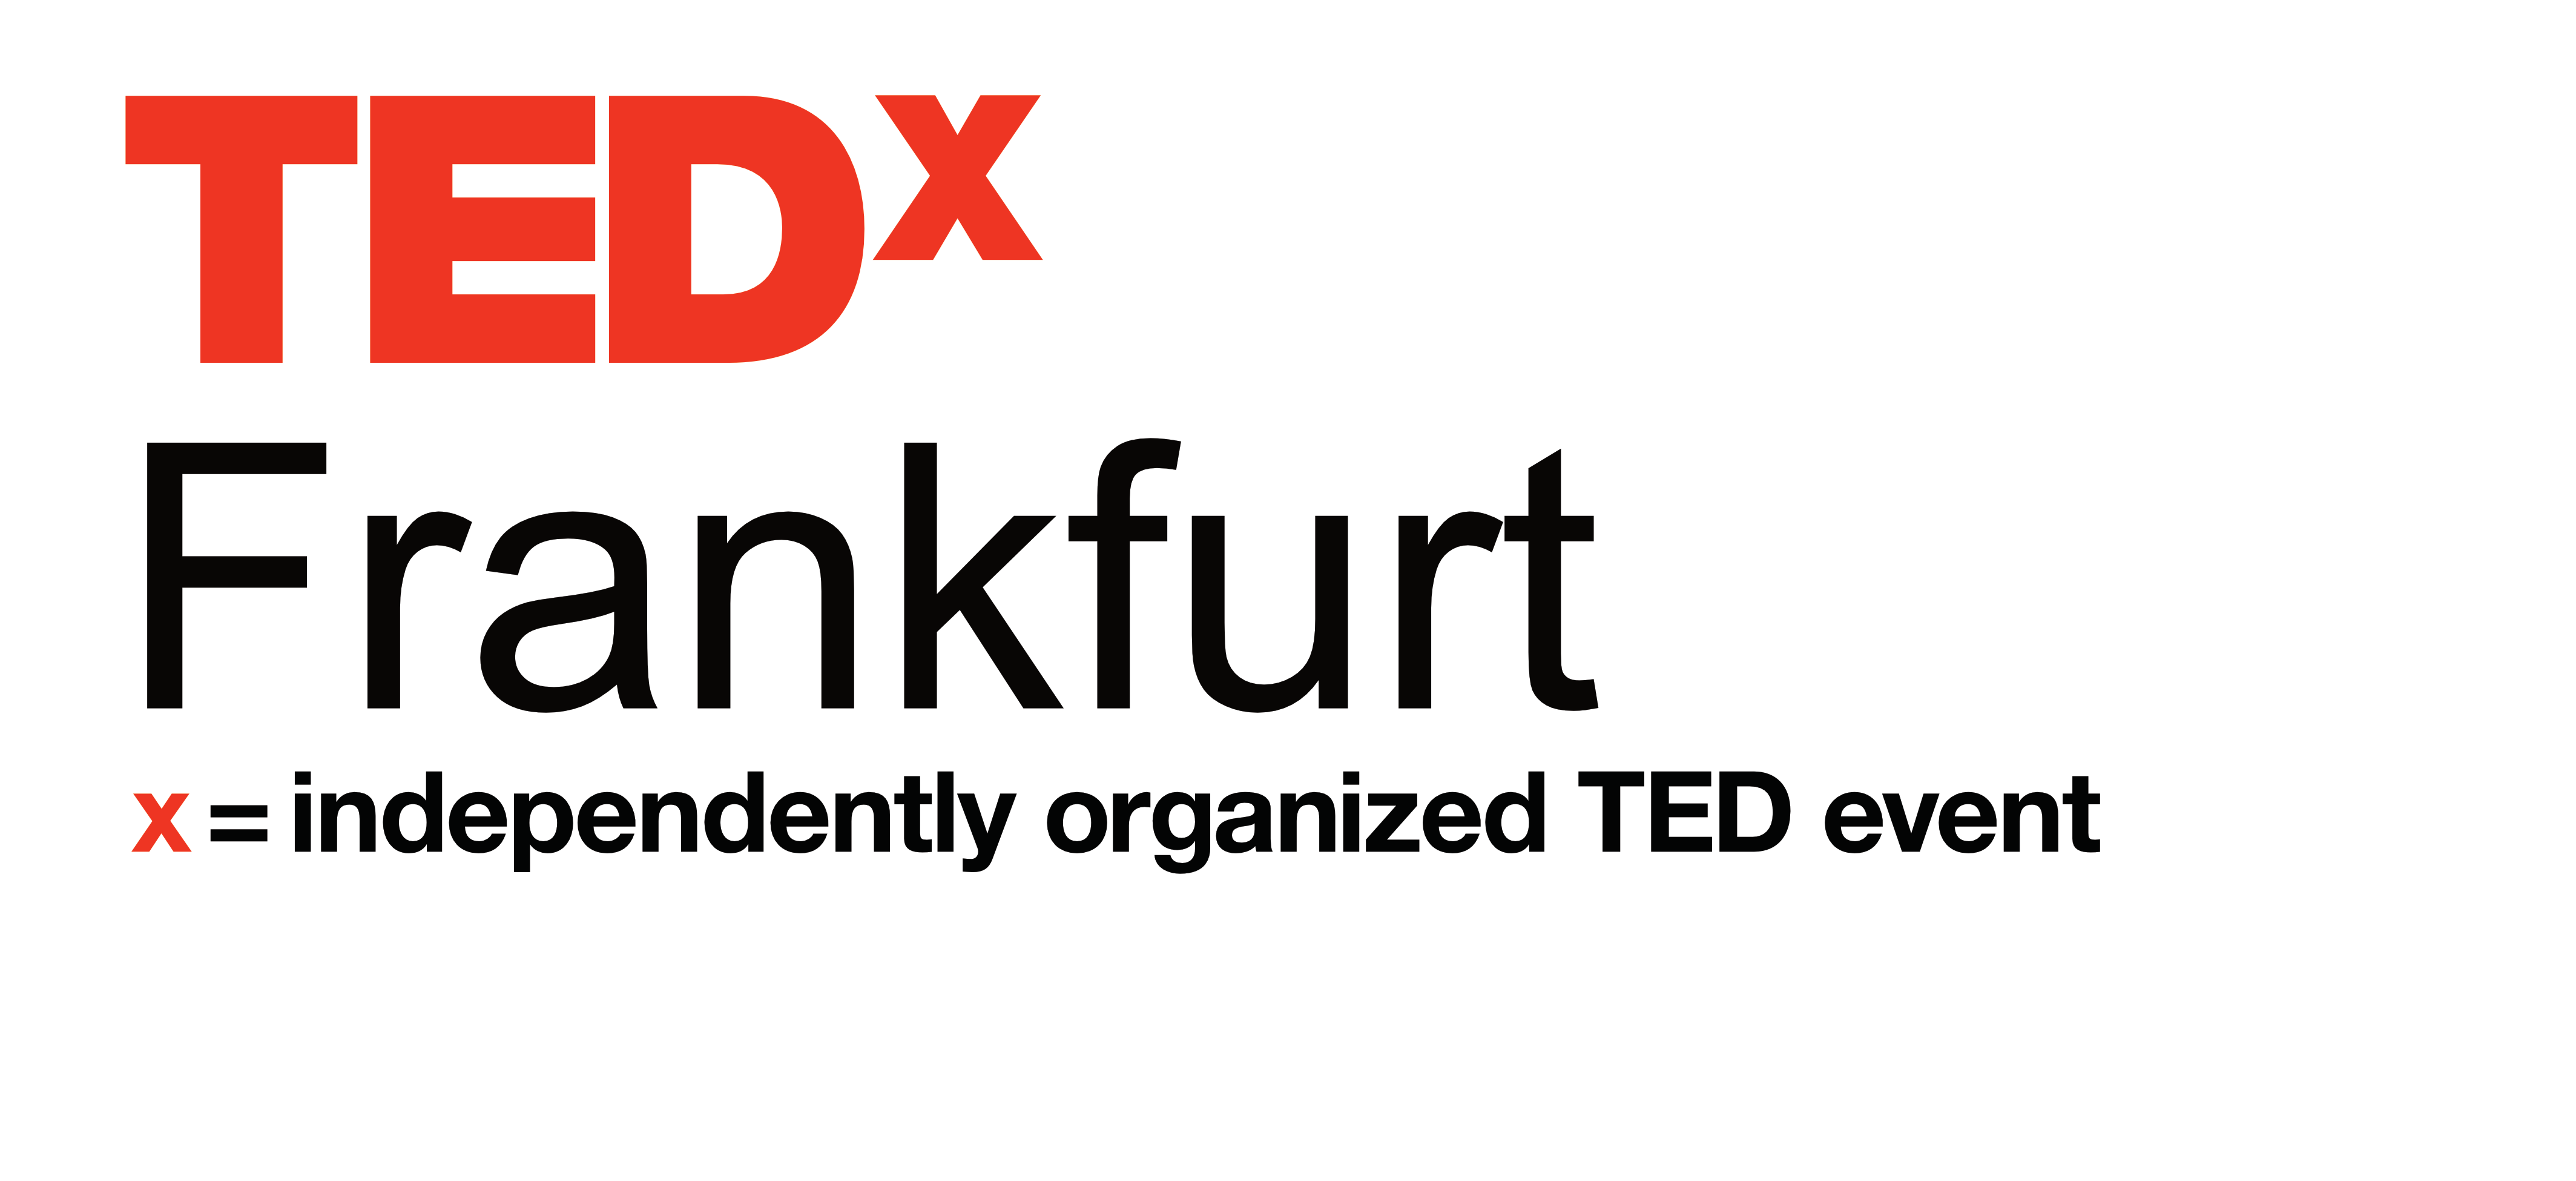 Press Release: TEDxFrankfurt is back